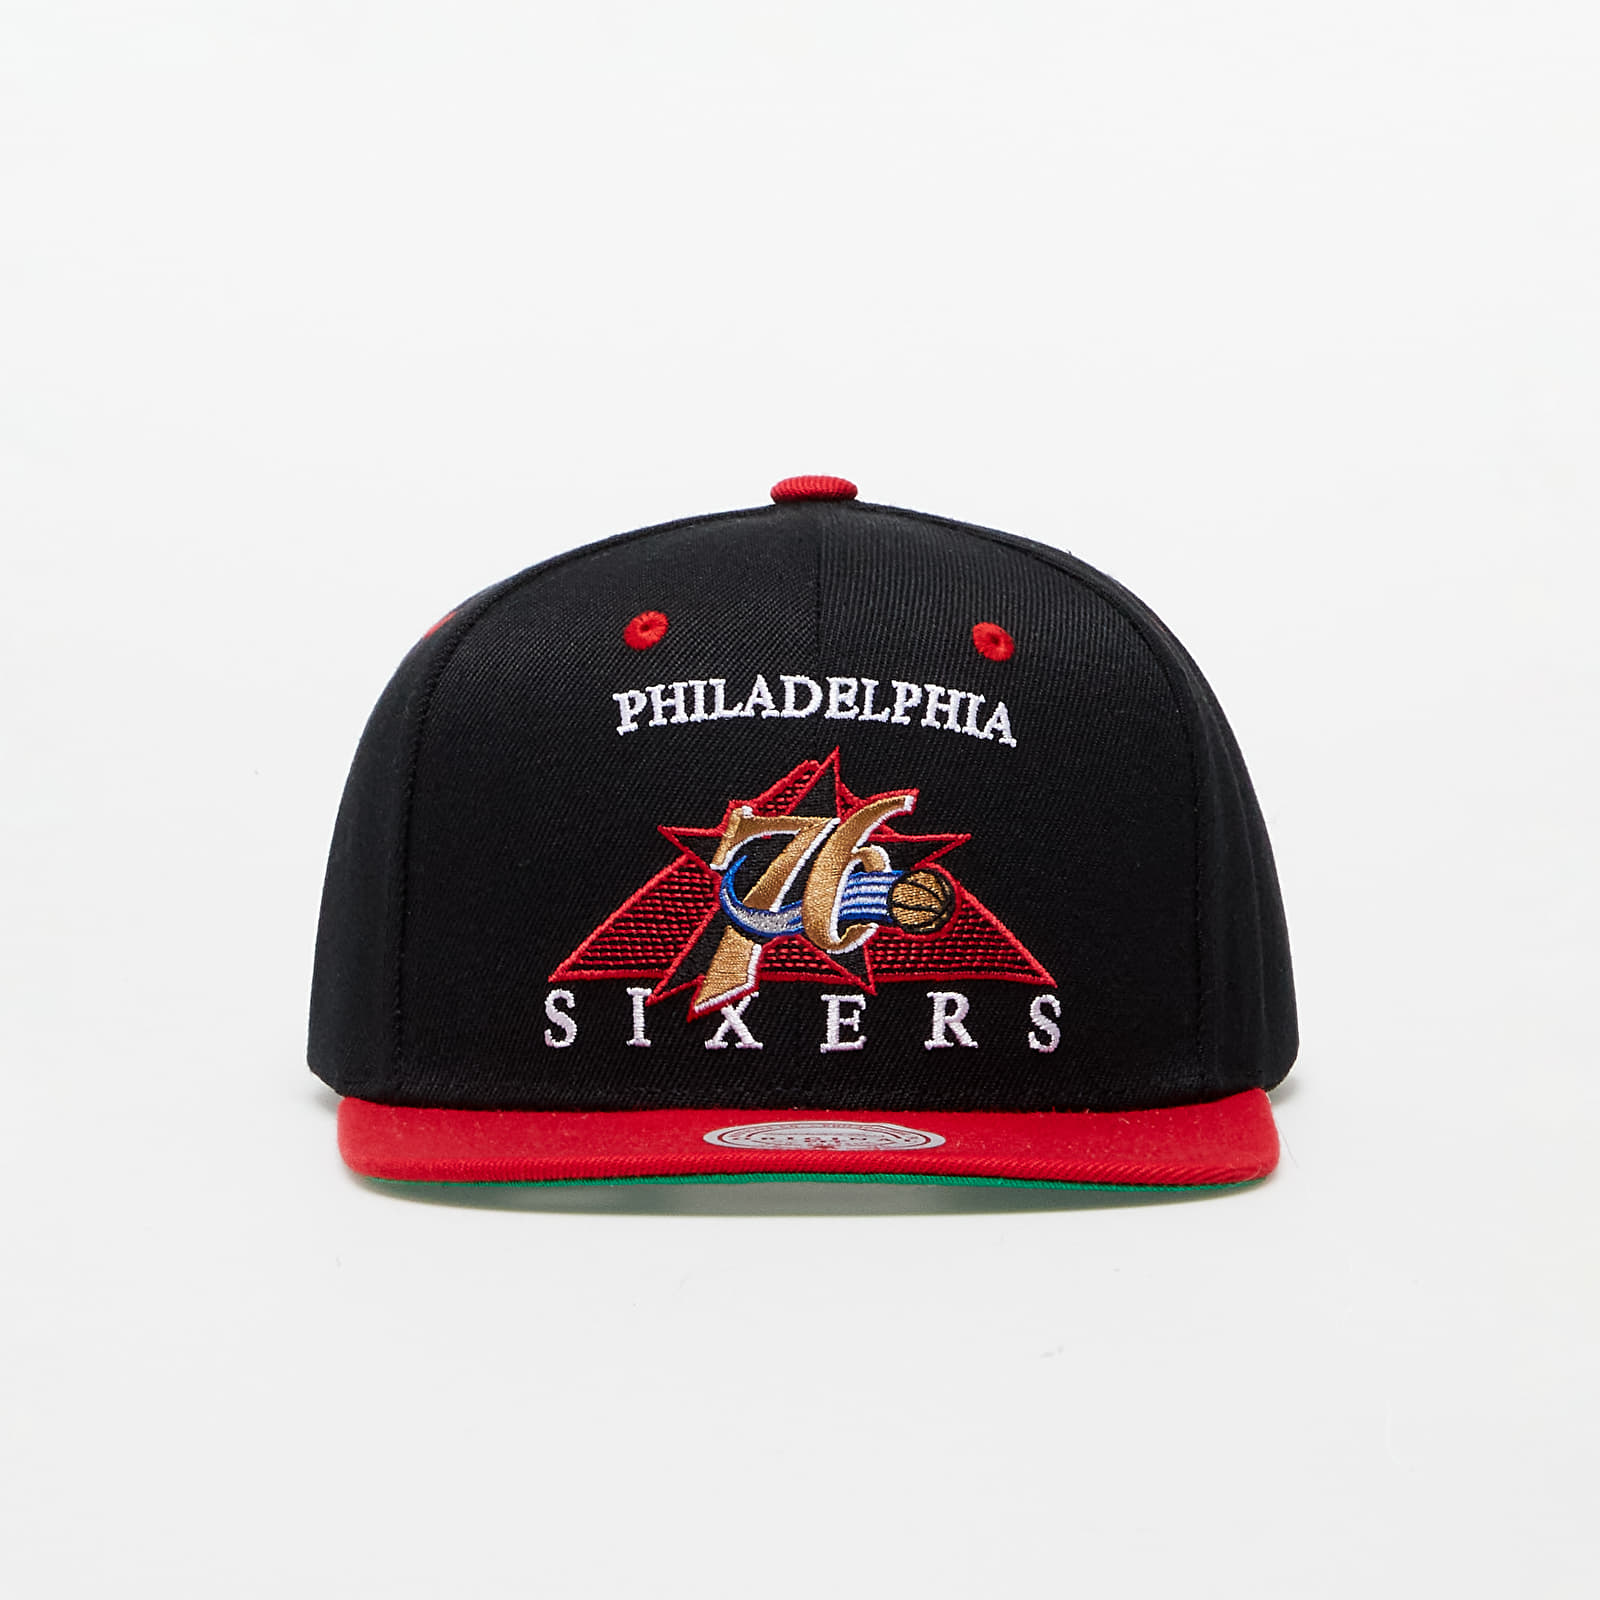 Caps Mitchell & Ness NBA 75th Platinum Snapback Raptors Red / White